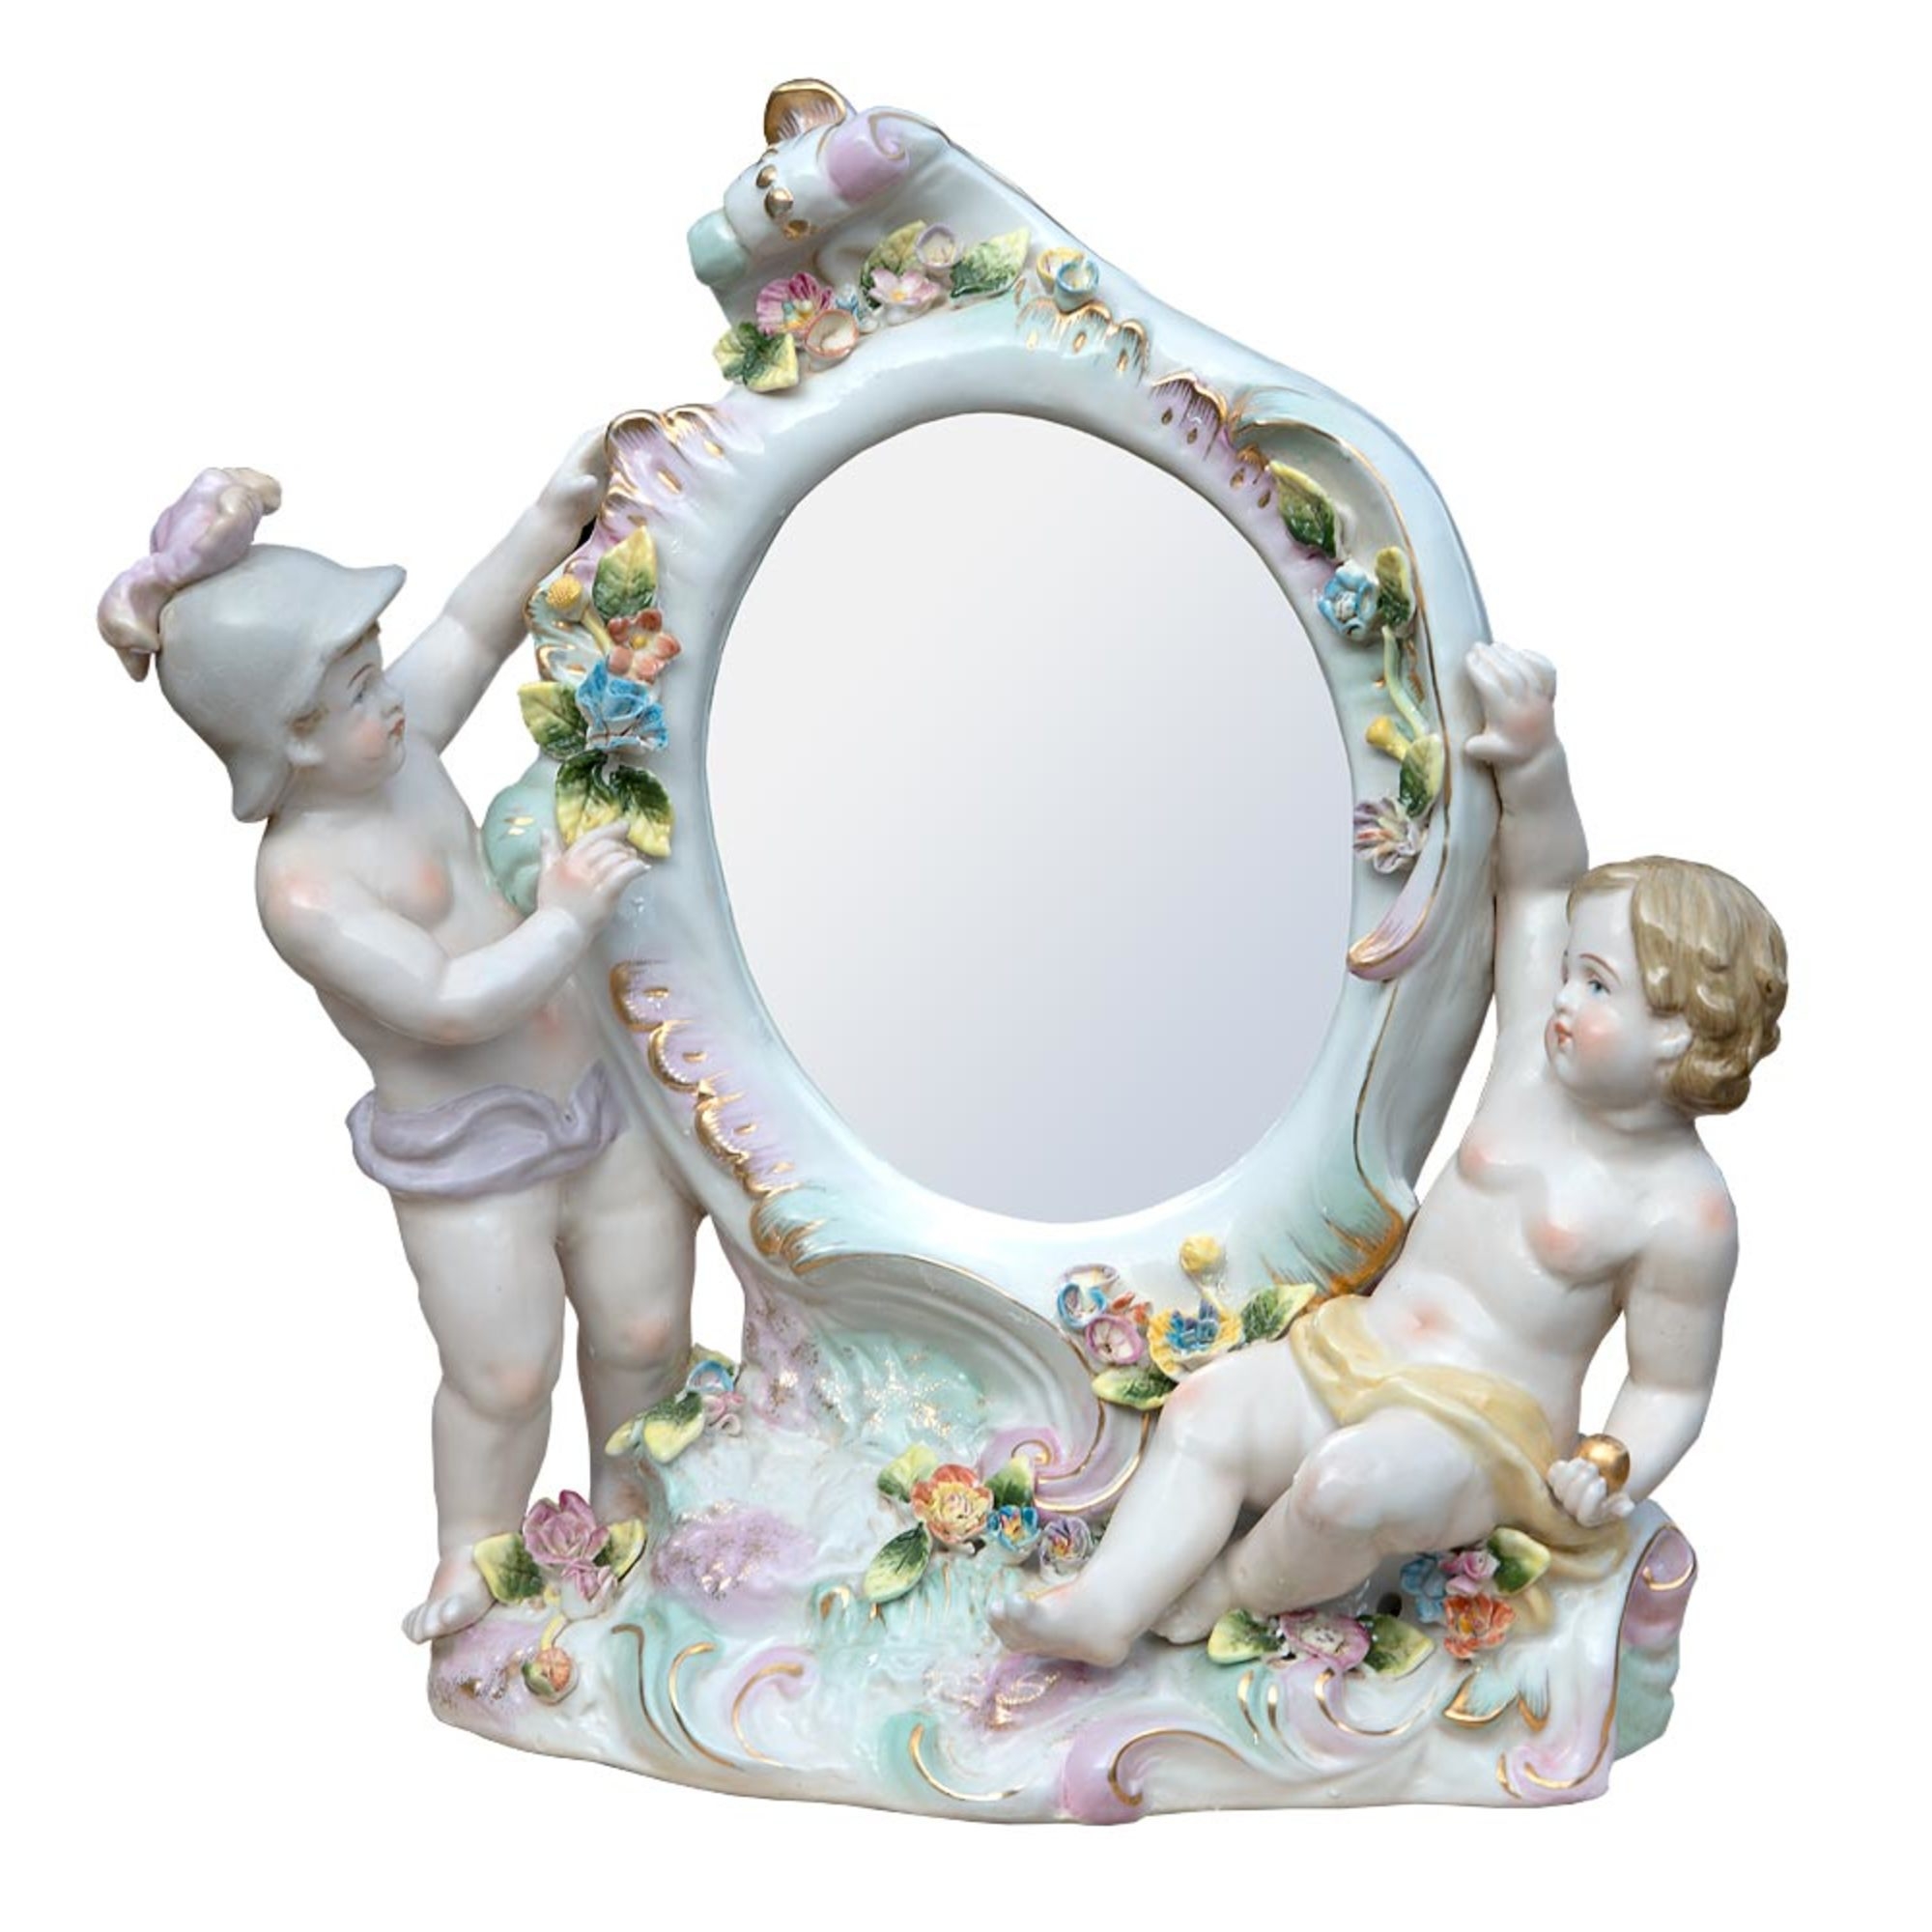 Floral Cherub Antique Style Ceramic Oval Decorative Table Mirror